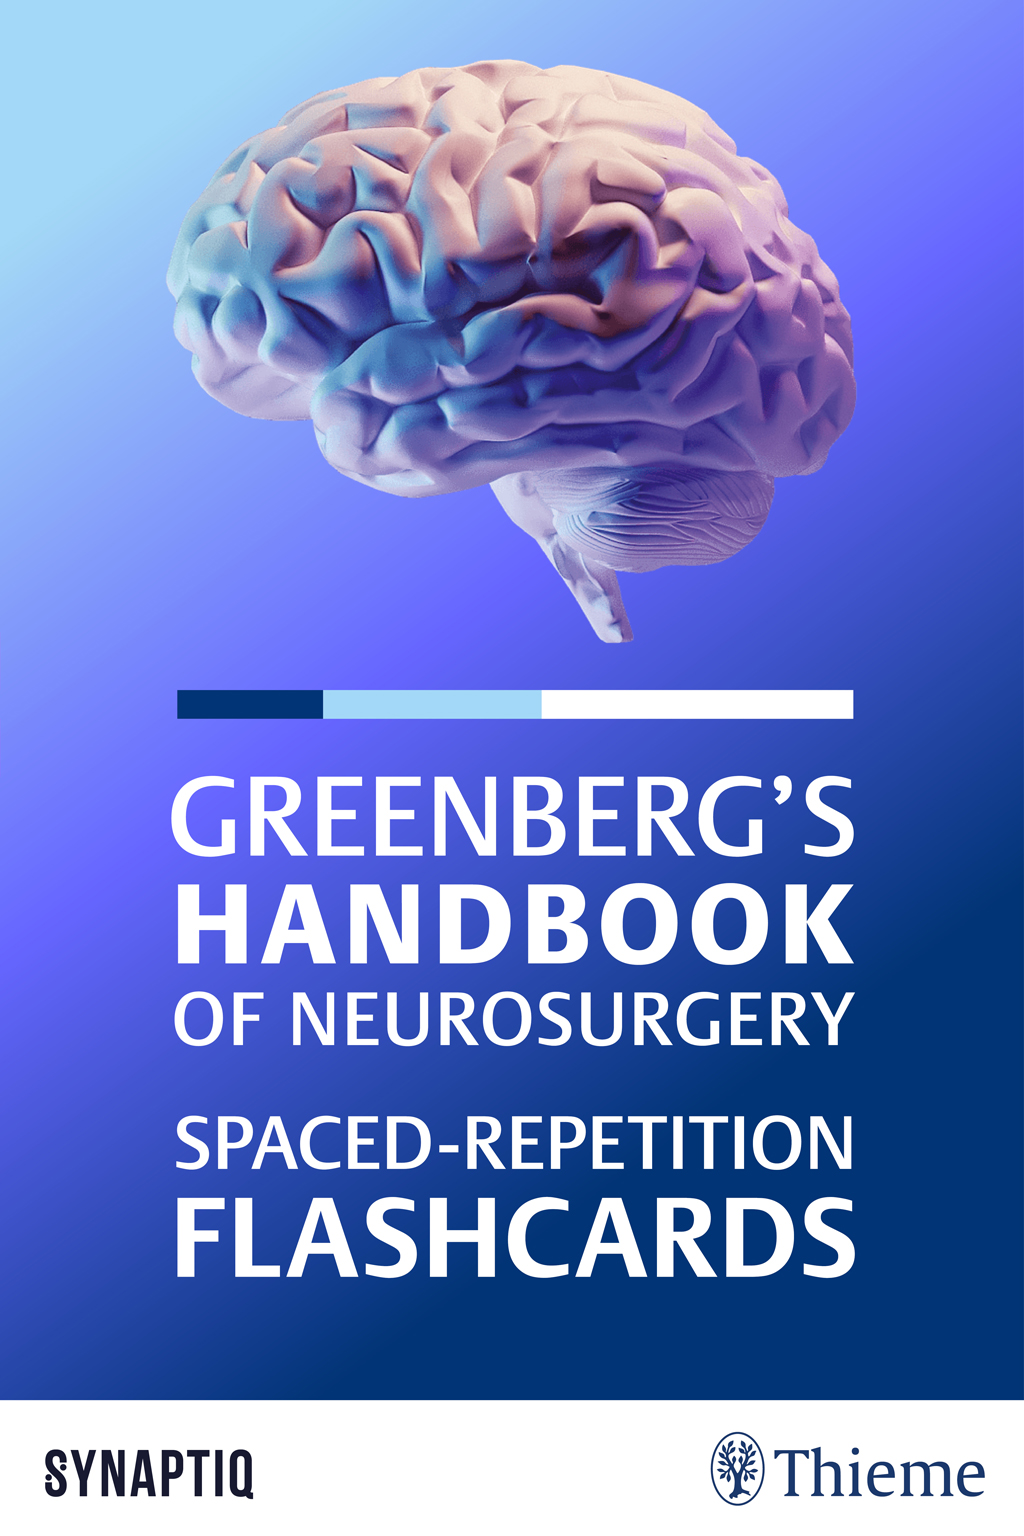 Greenberg's Handbook of Neurosurgery Spaced-Repeition Flashcards